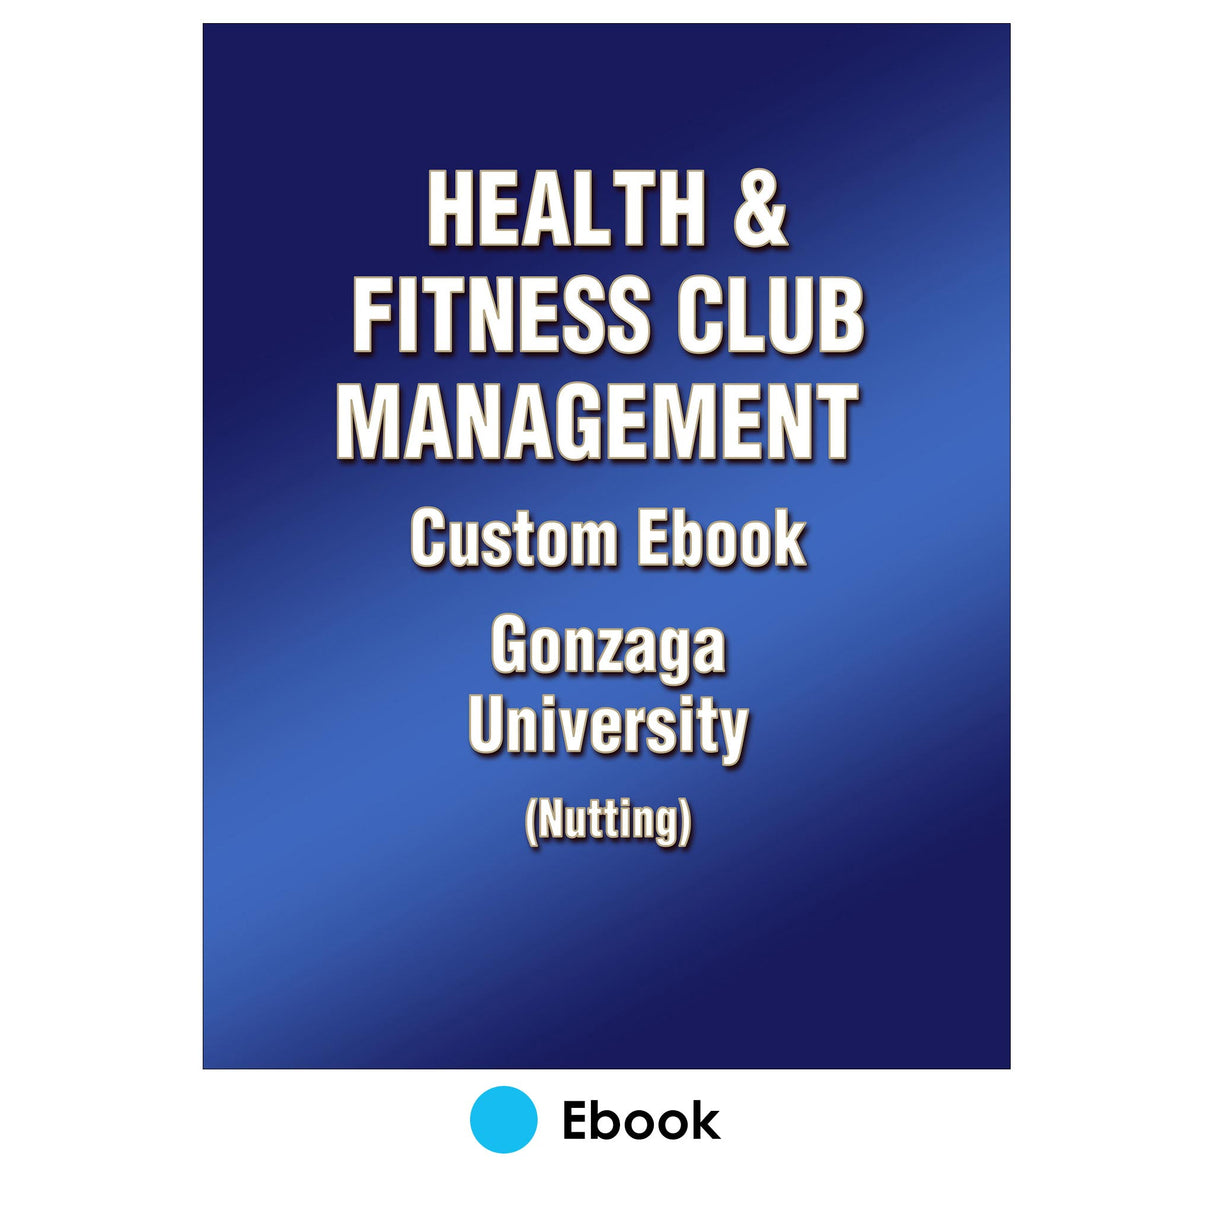 Health & Fitness Club Management Custom Ebook: Gonzaga University (Nutting)